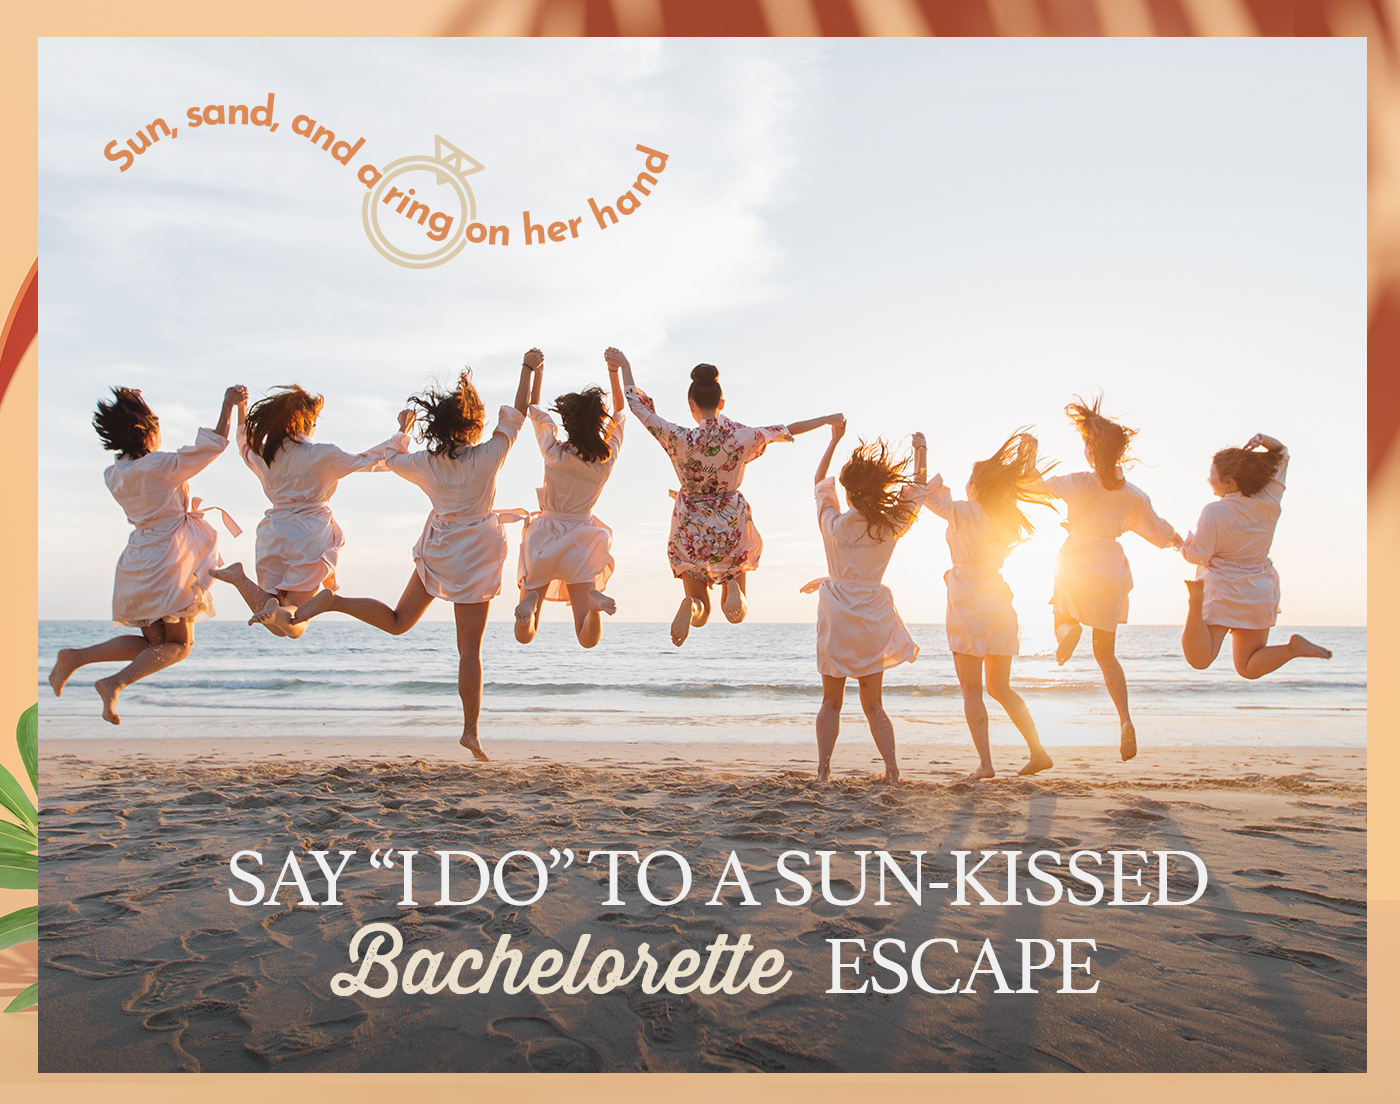 Say “I do” to a sun-kissed bachelorette escape